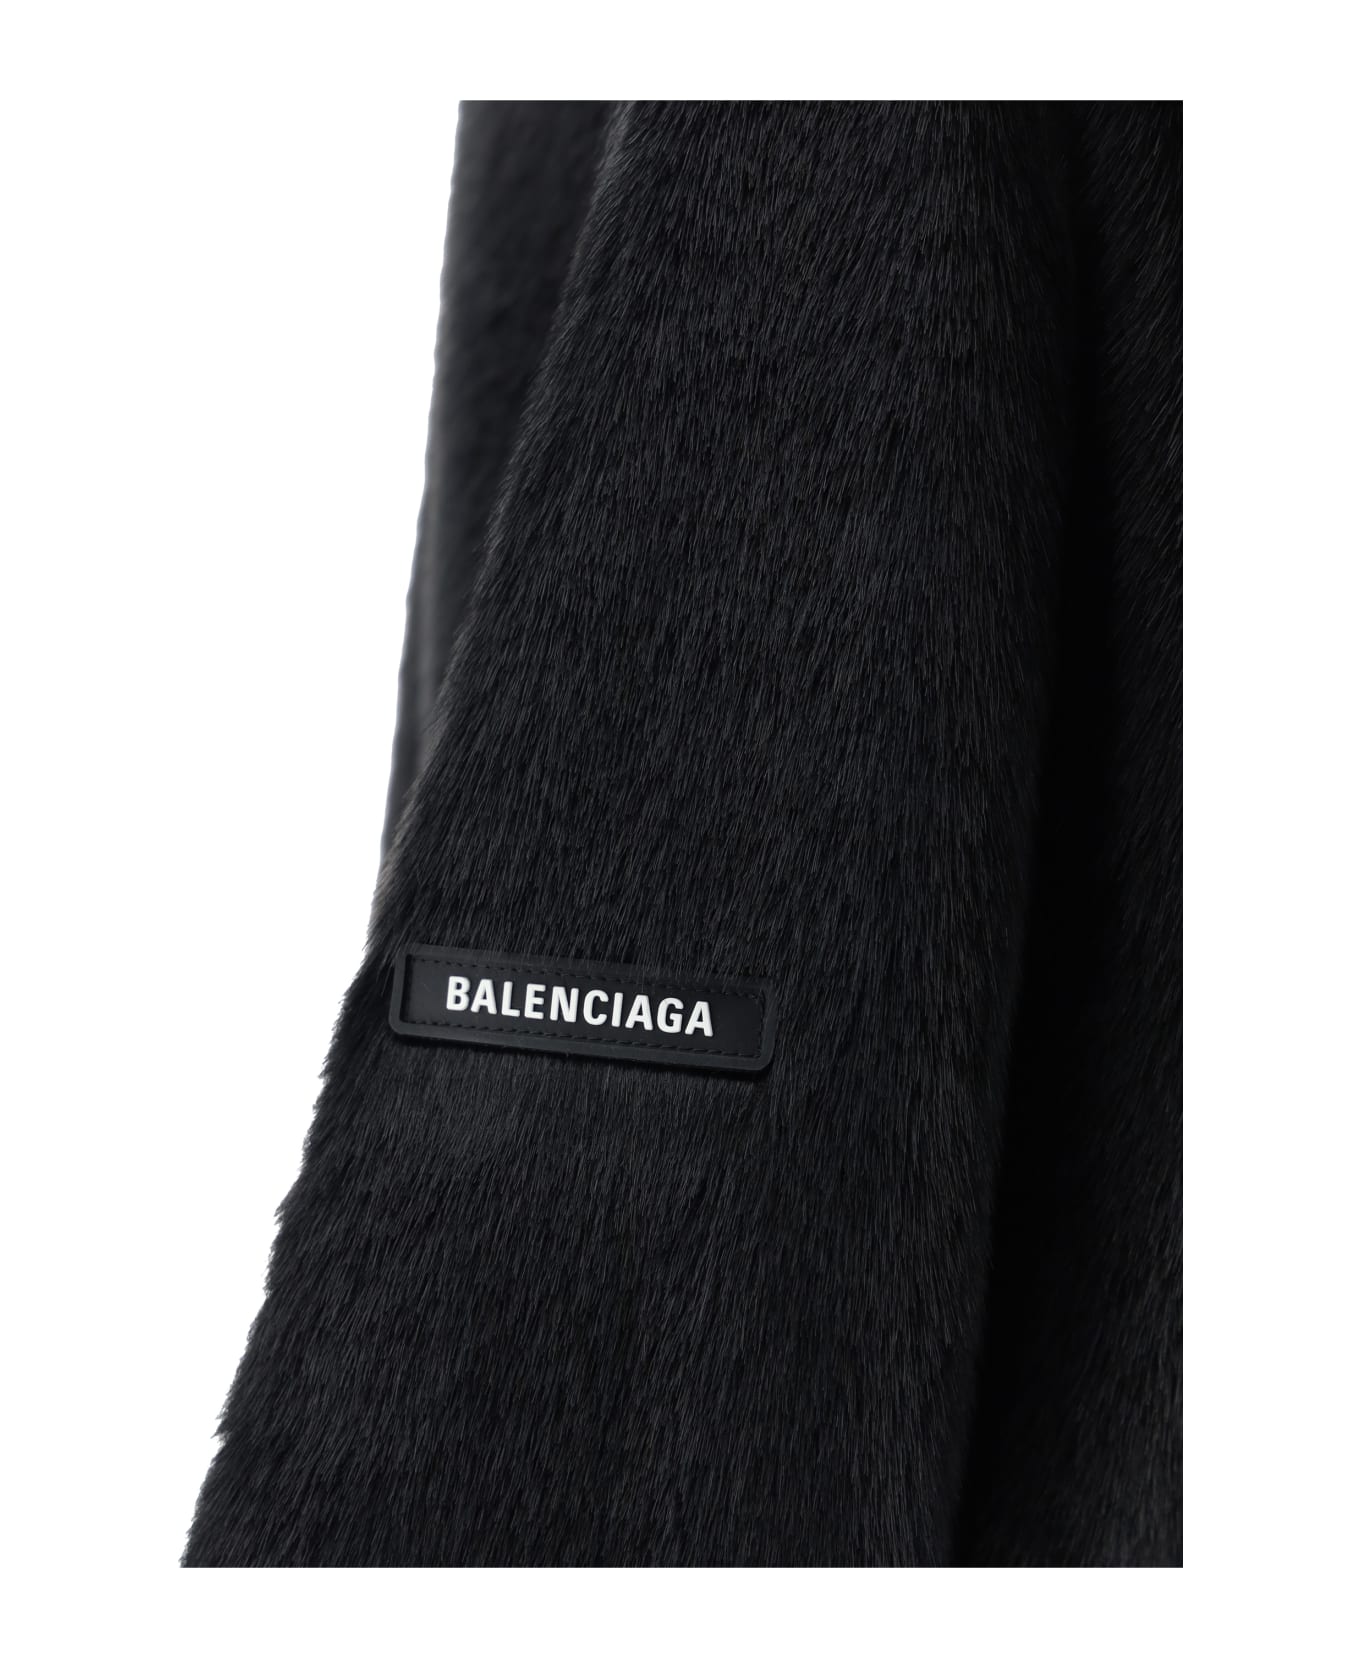 Balenciaga Jacket - Black